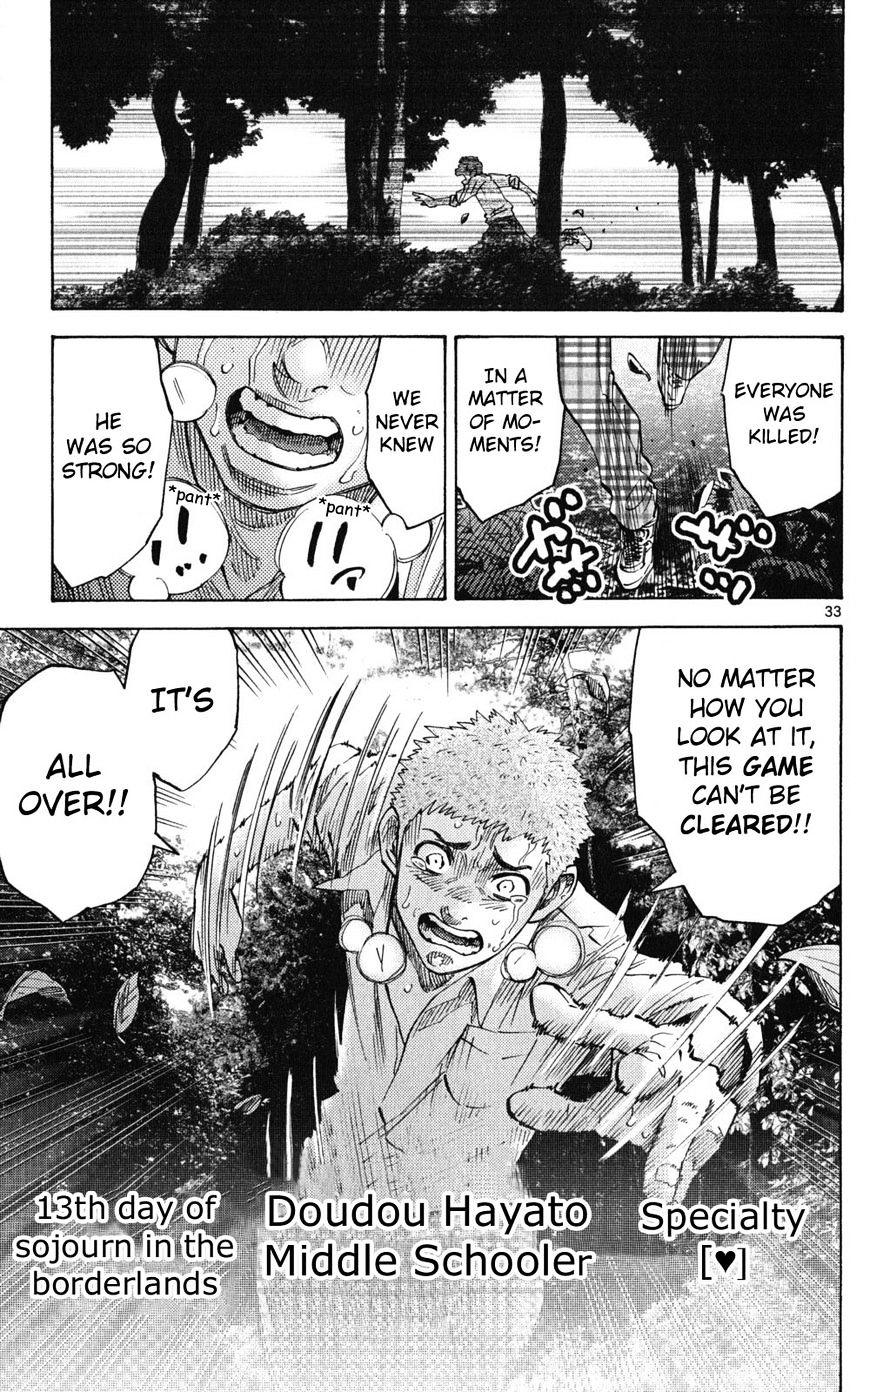 Imawa No Kuni No Alice Chapter 49.1 : Side Story 5 - King Of Spades (1) page 31 - Mangakakalot